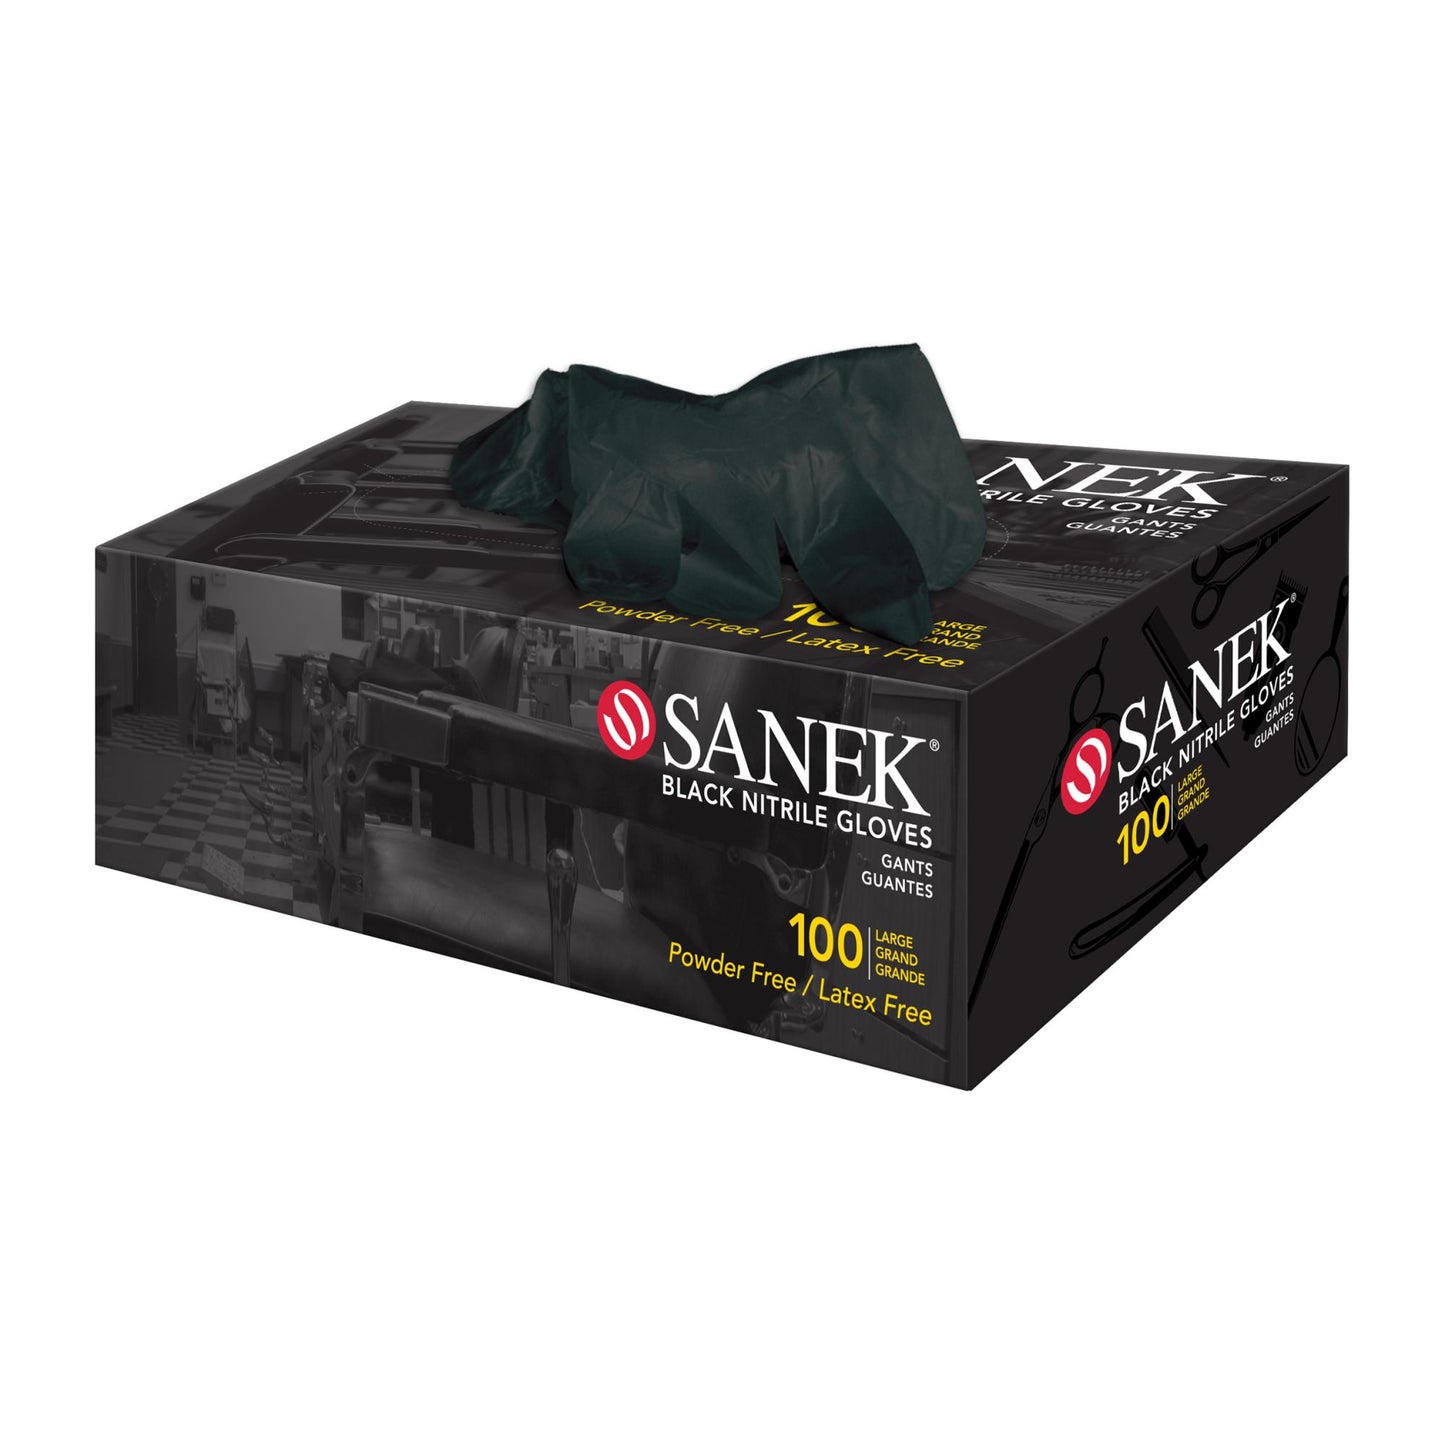 Sanek Black Nitrile Gloves, 100 ct